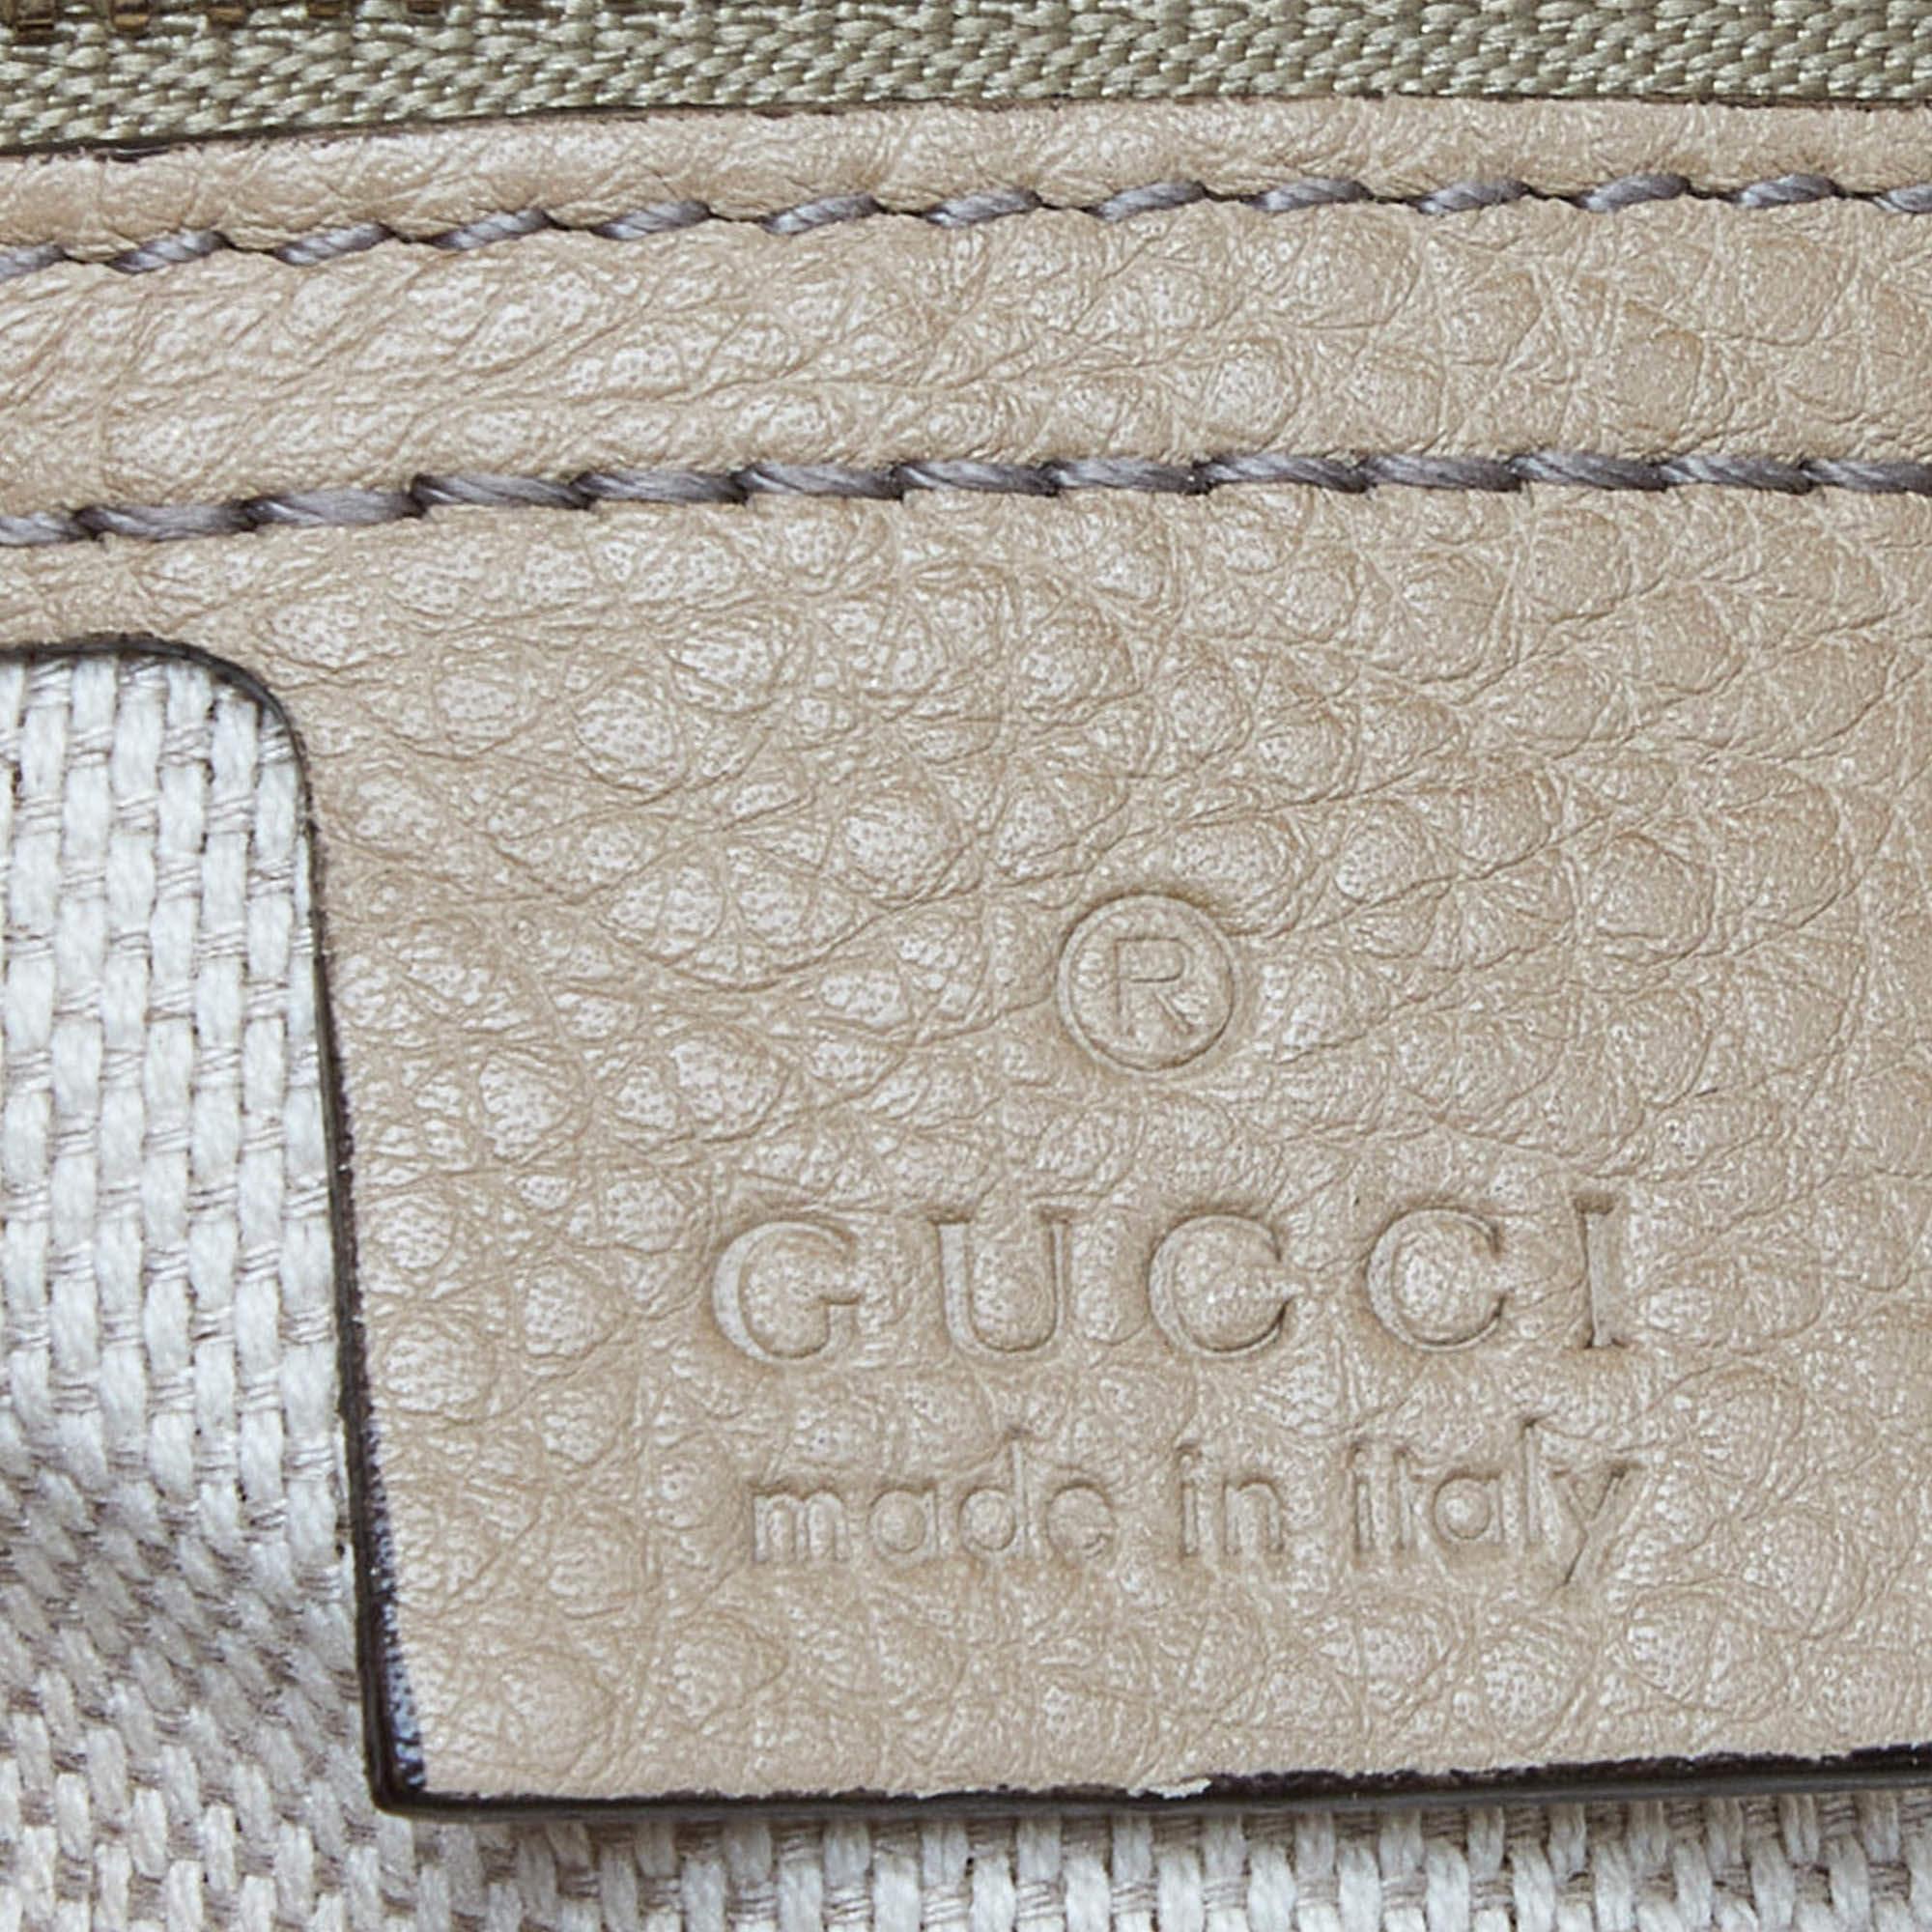 Gucci Beige Leather Medium Soho Chain Shoulder Bag For Sale 2